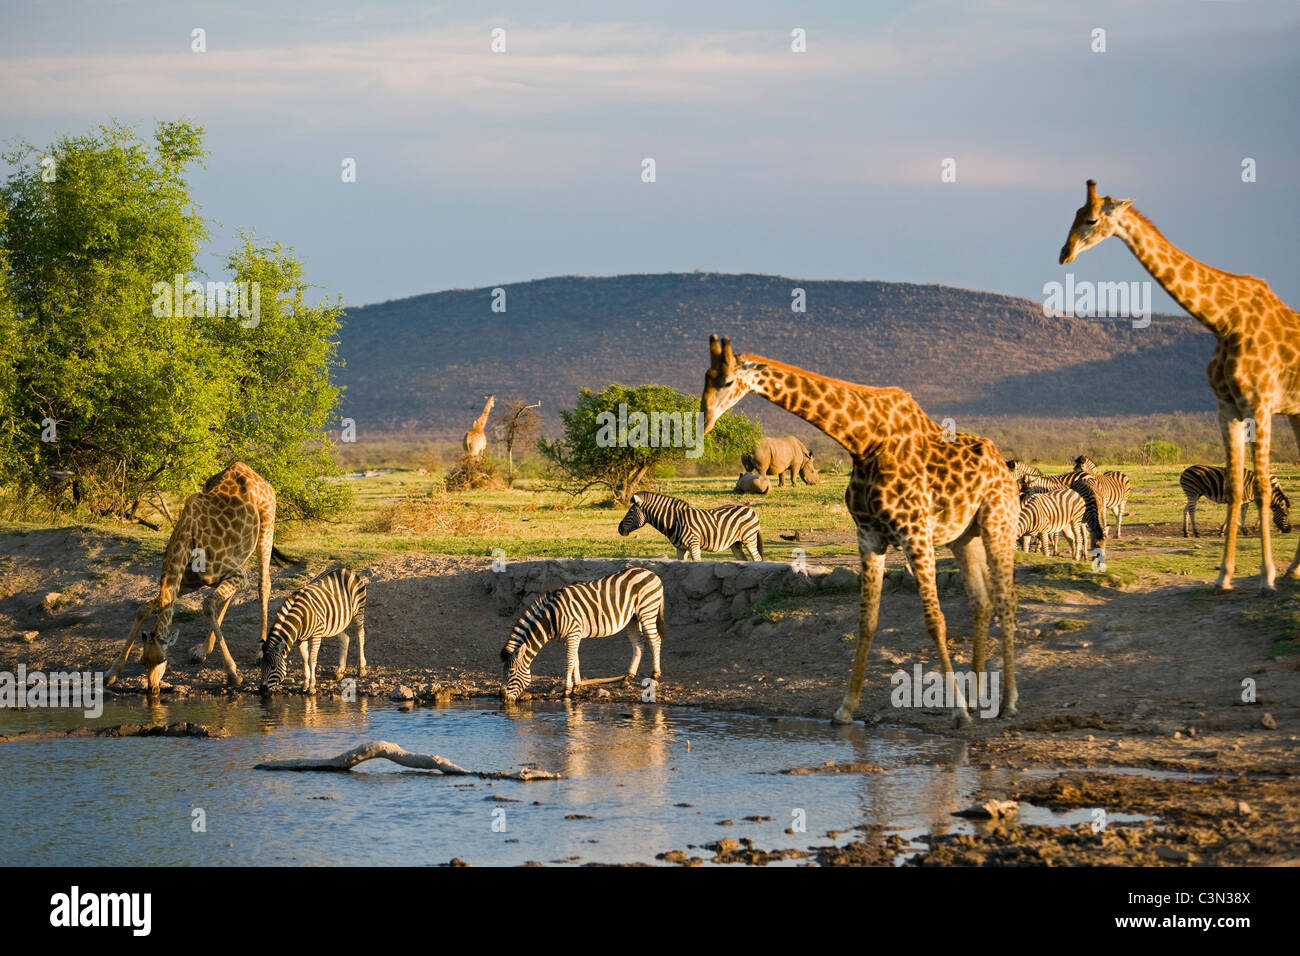 Sudáfrica, el Parque Nacional de Madikwe Jirafa,Ceratotherium simum Burchell, zebra Equus burchelli, bebiendo al orificio de agua Foto de stock